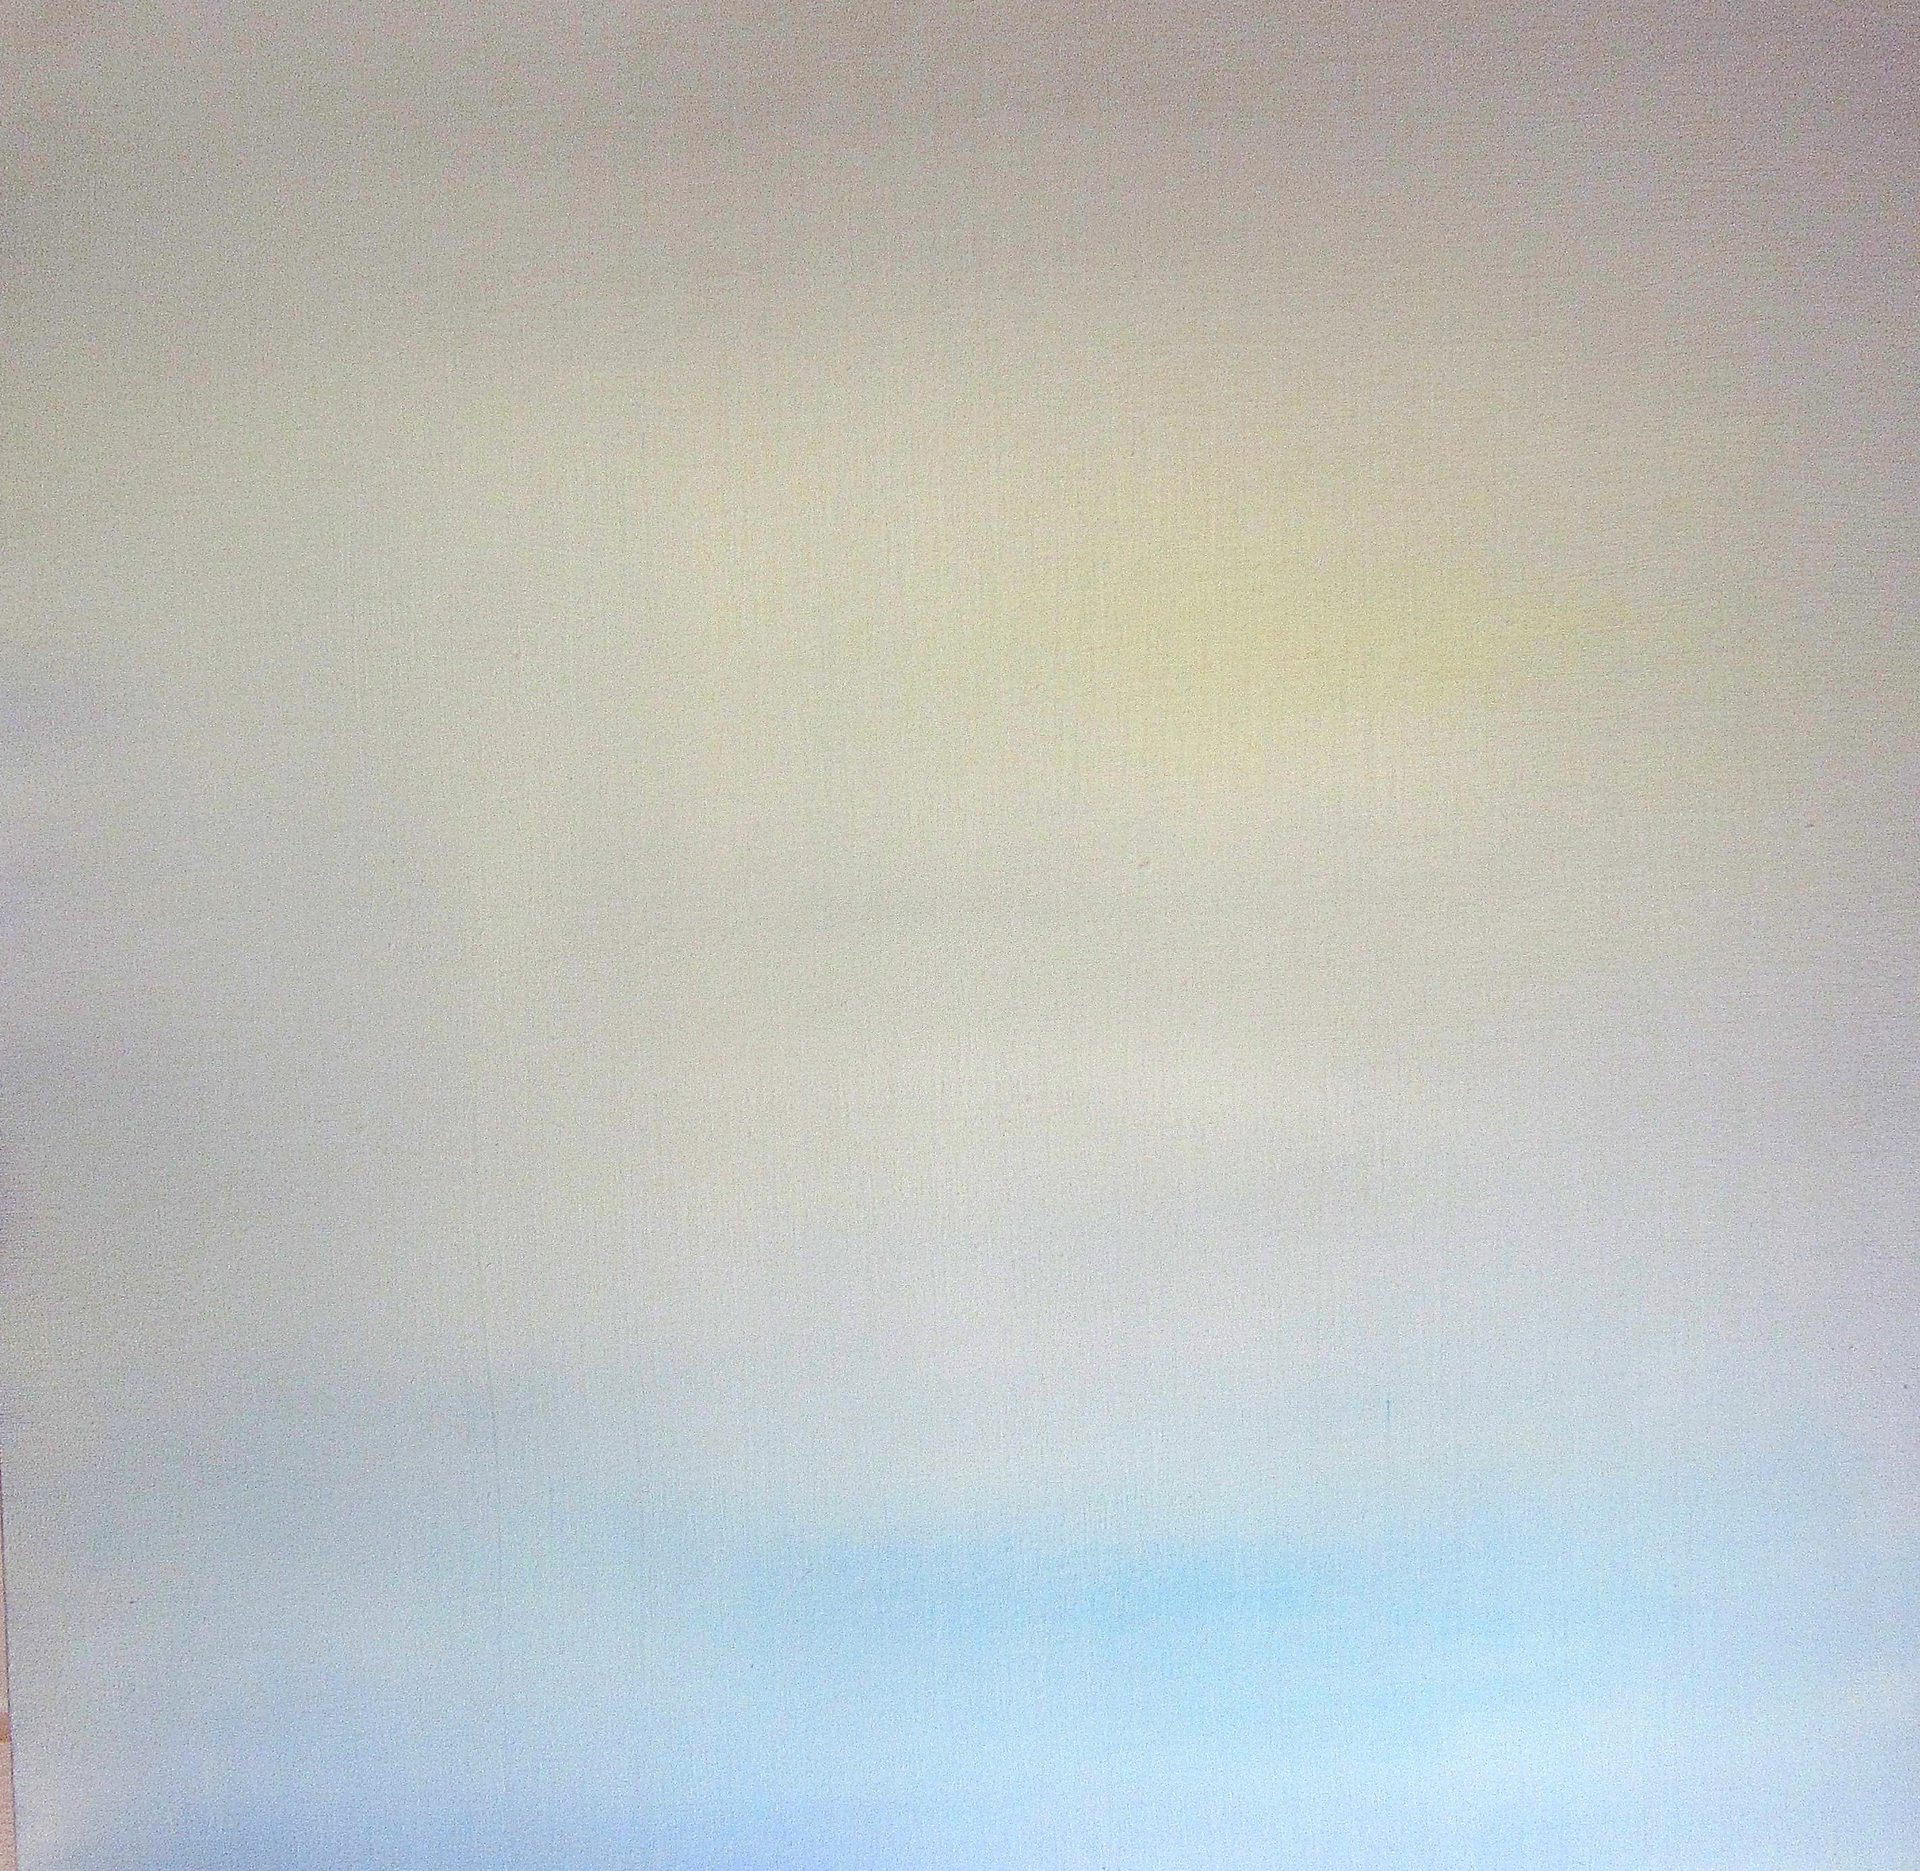 Oil on canvas, 2017, 45 x 45 cm